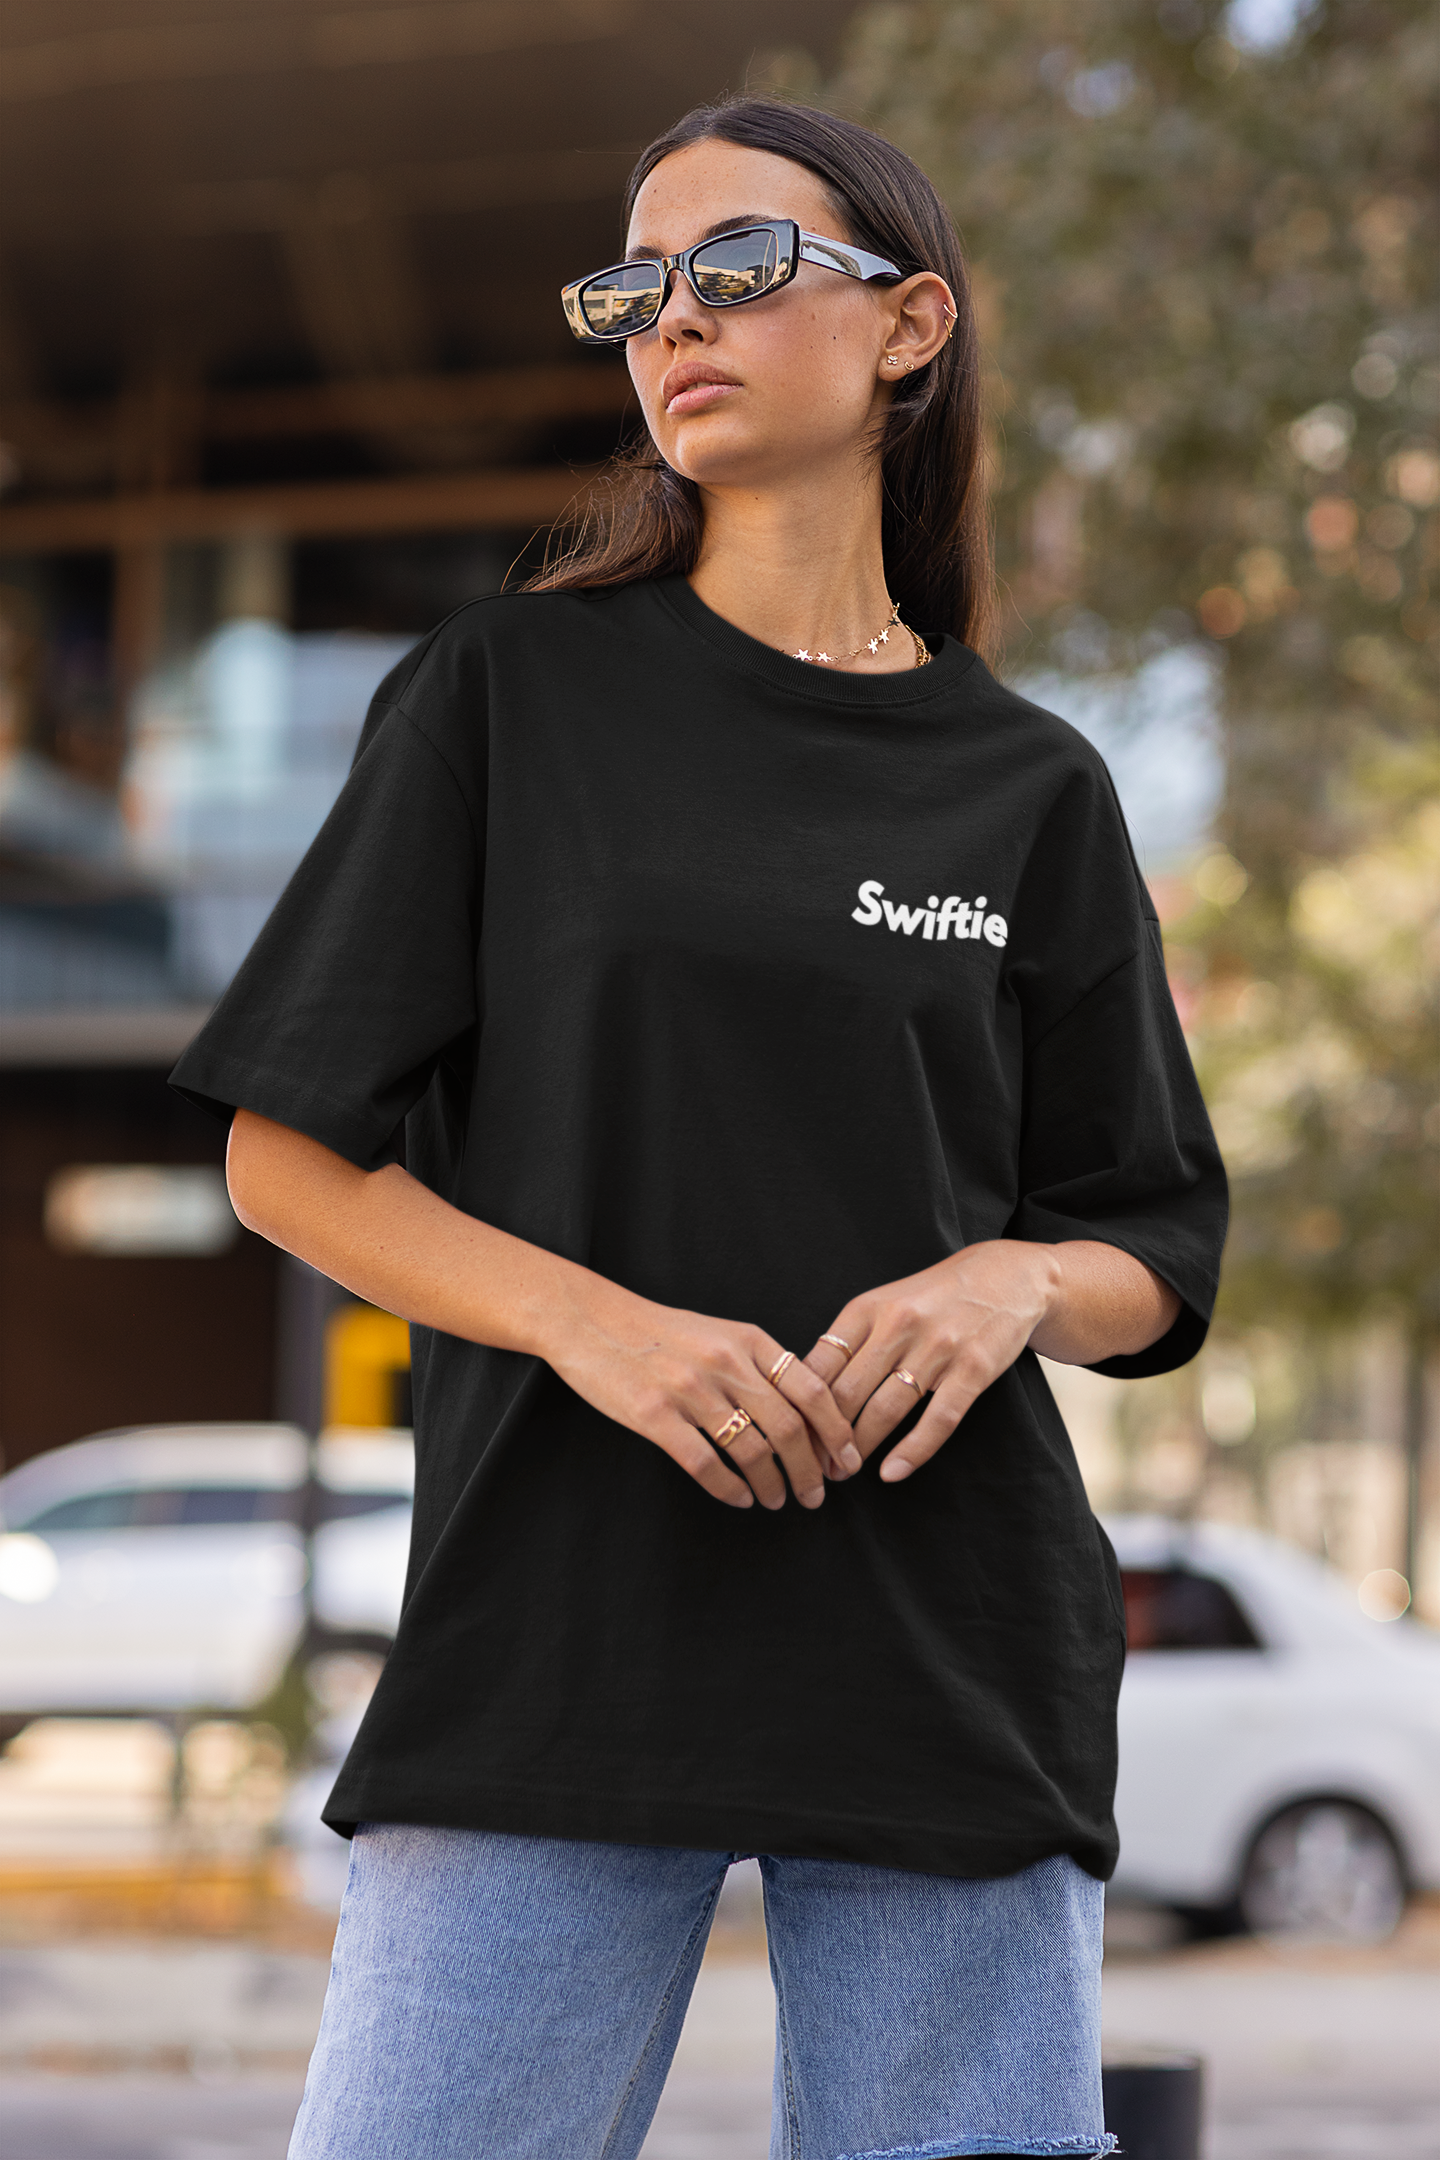 Rockstar | Taylor Swift | Premium Oversized Half Sleeve Unisex T-Shirt